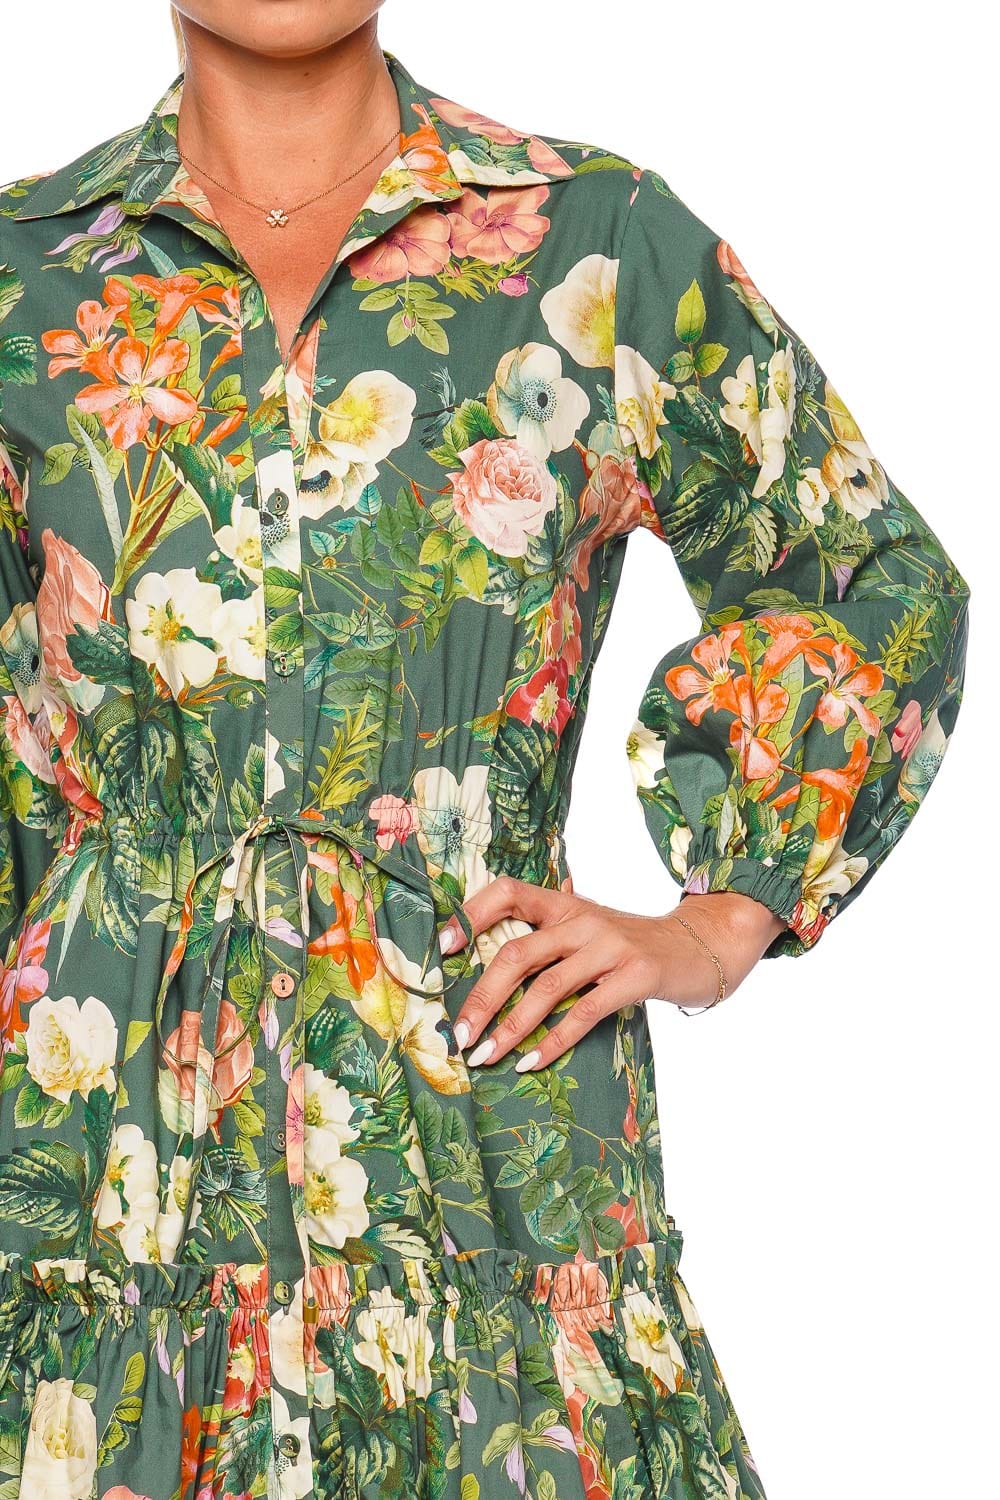 Cara Cara ROBIN DRESS MINI 180 Olive Kingston Floral